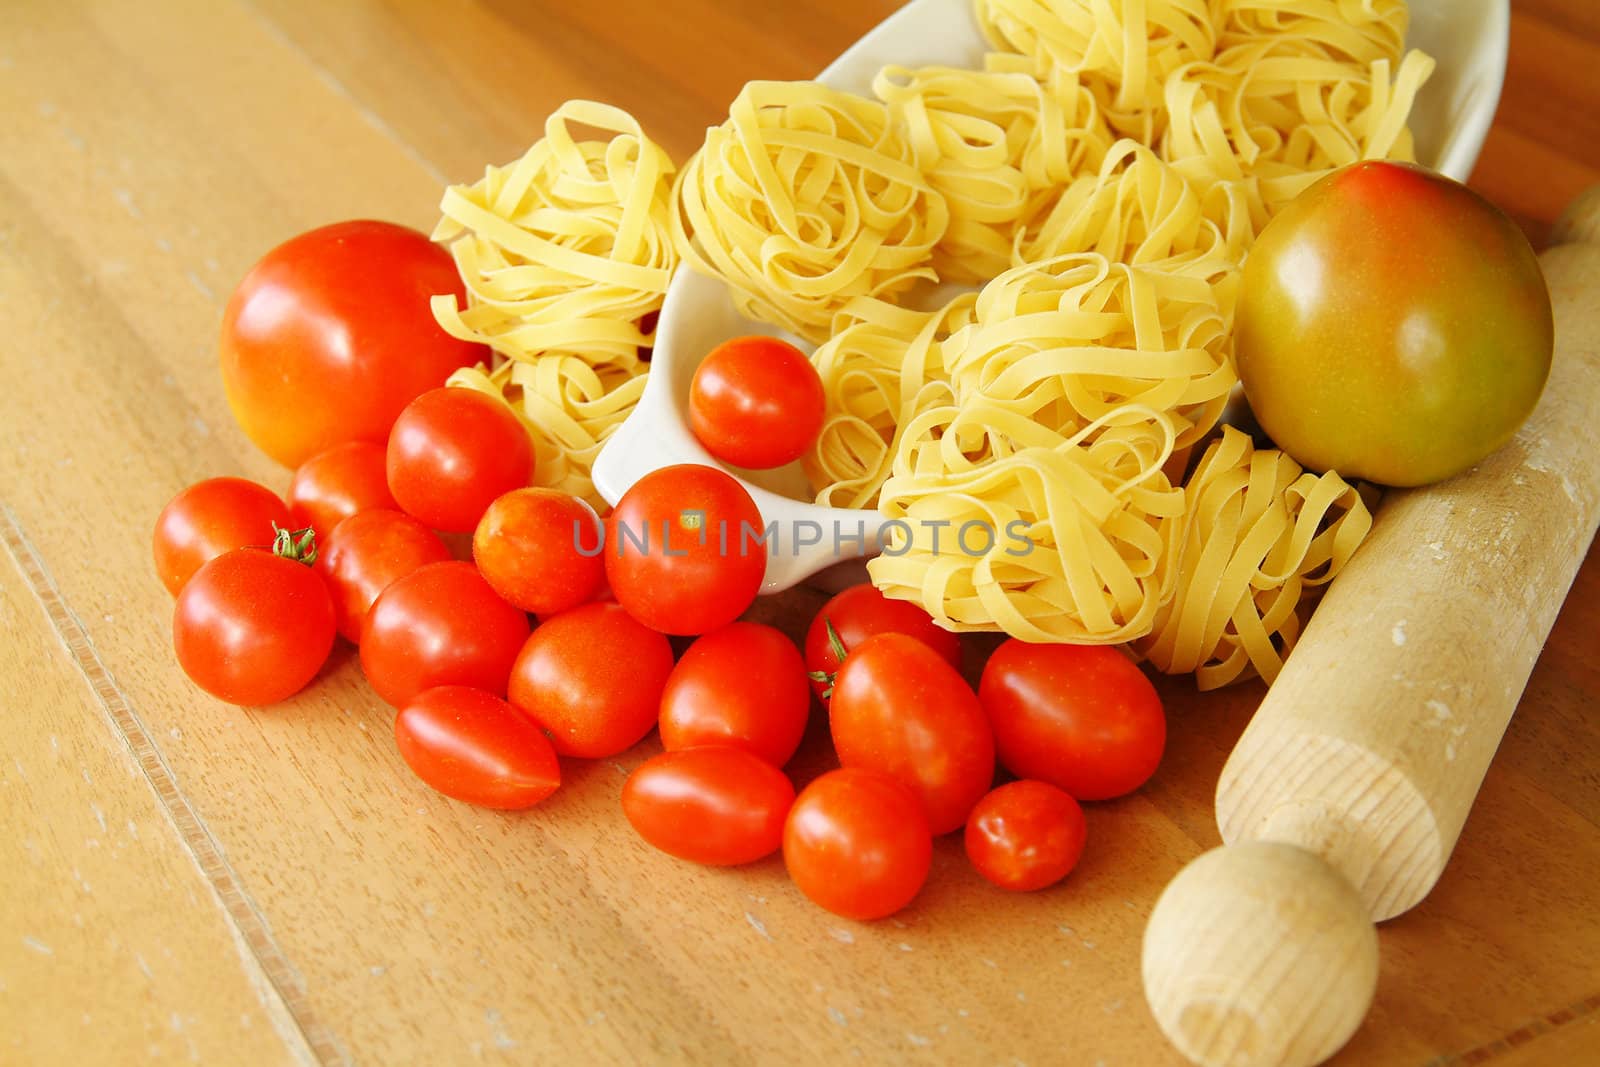 Tomato and pasta